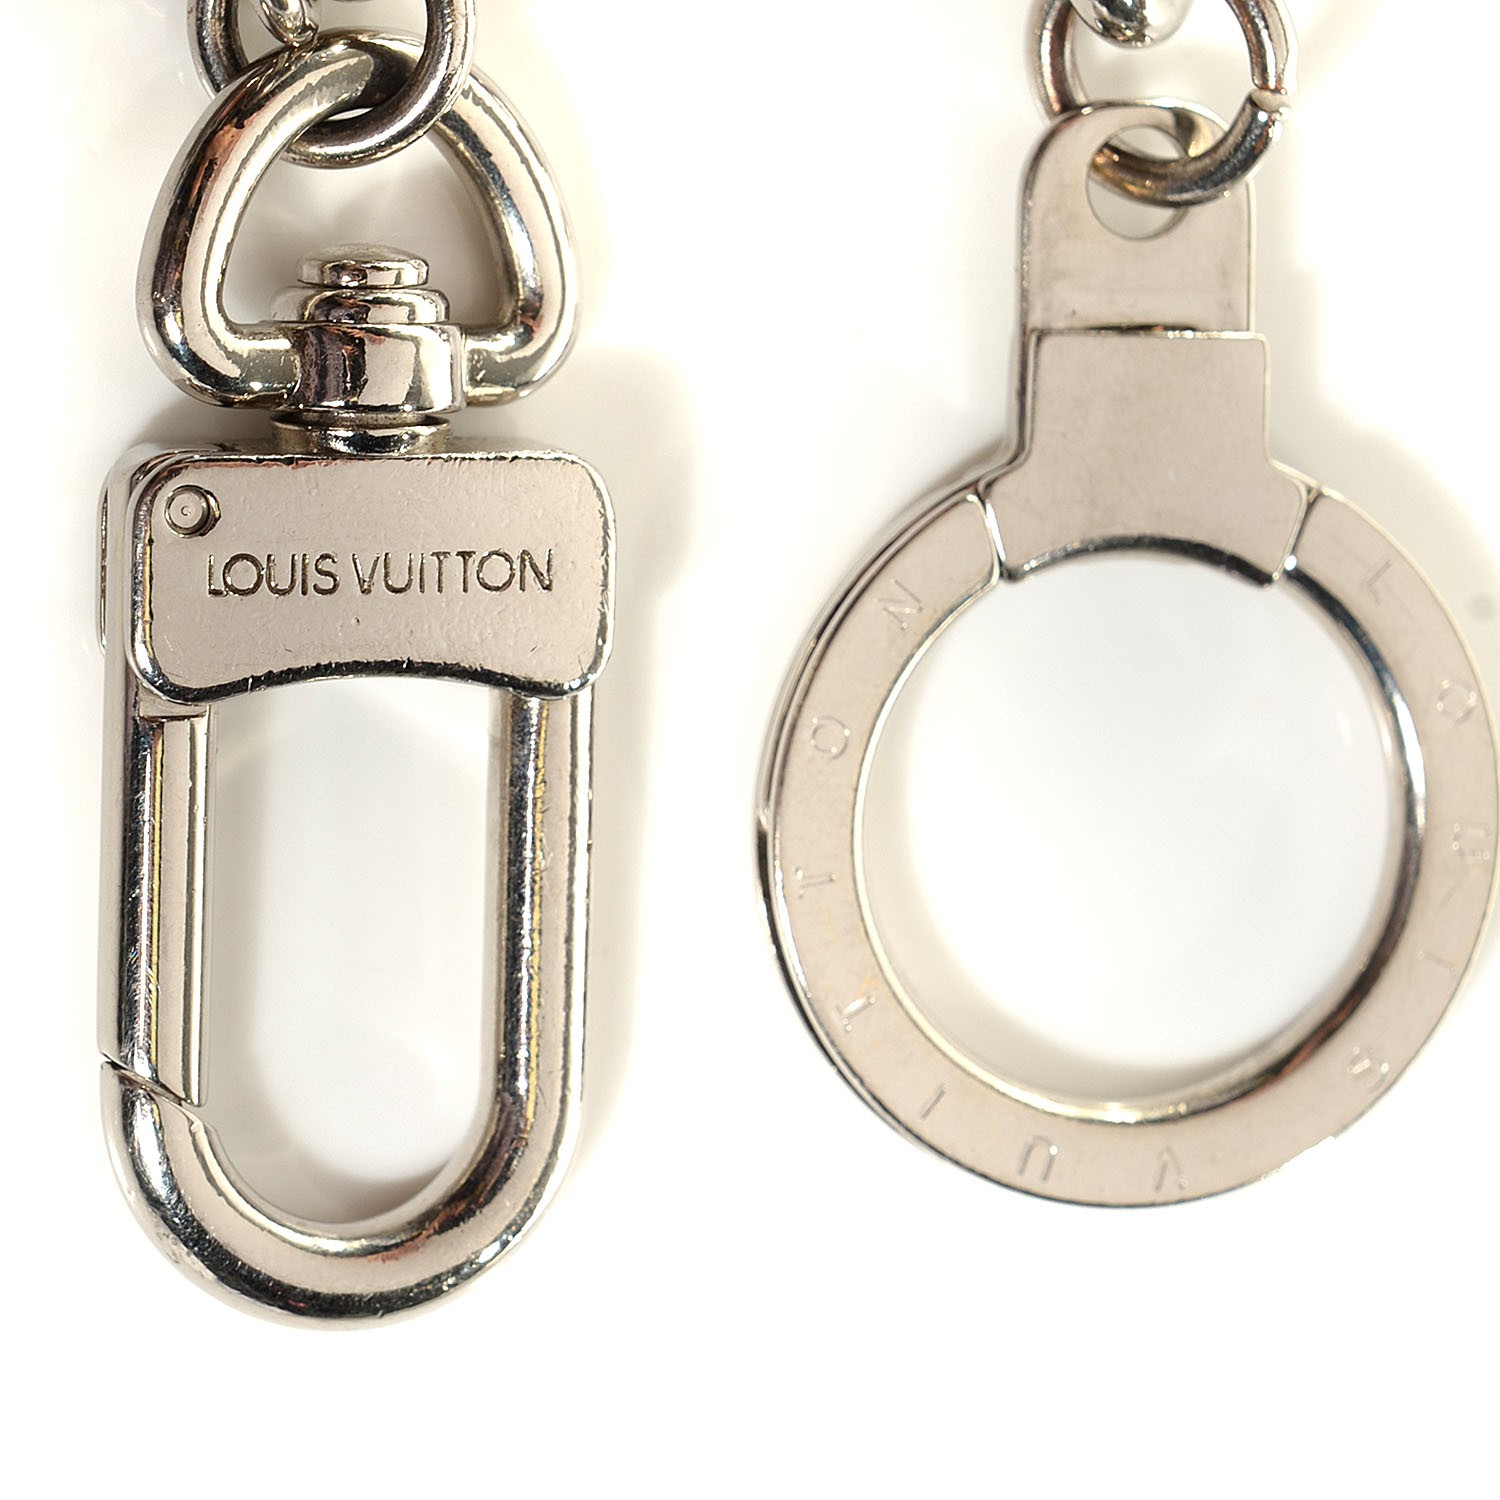 LOUIS VUITTON Mens XL Key Chain Silver 107061